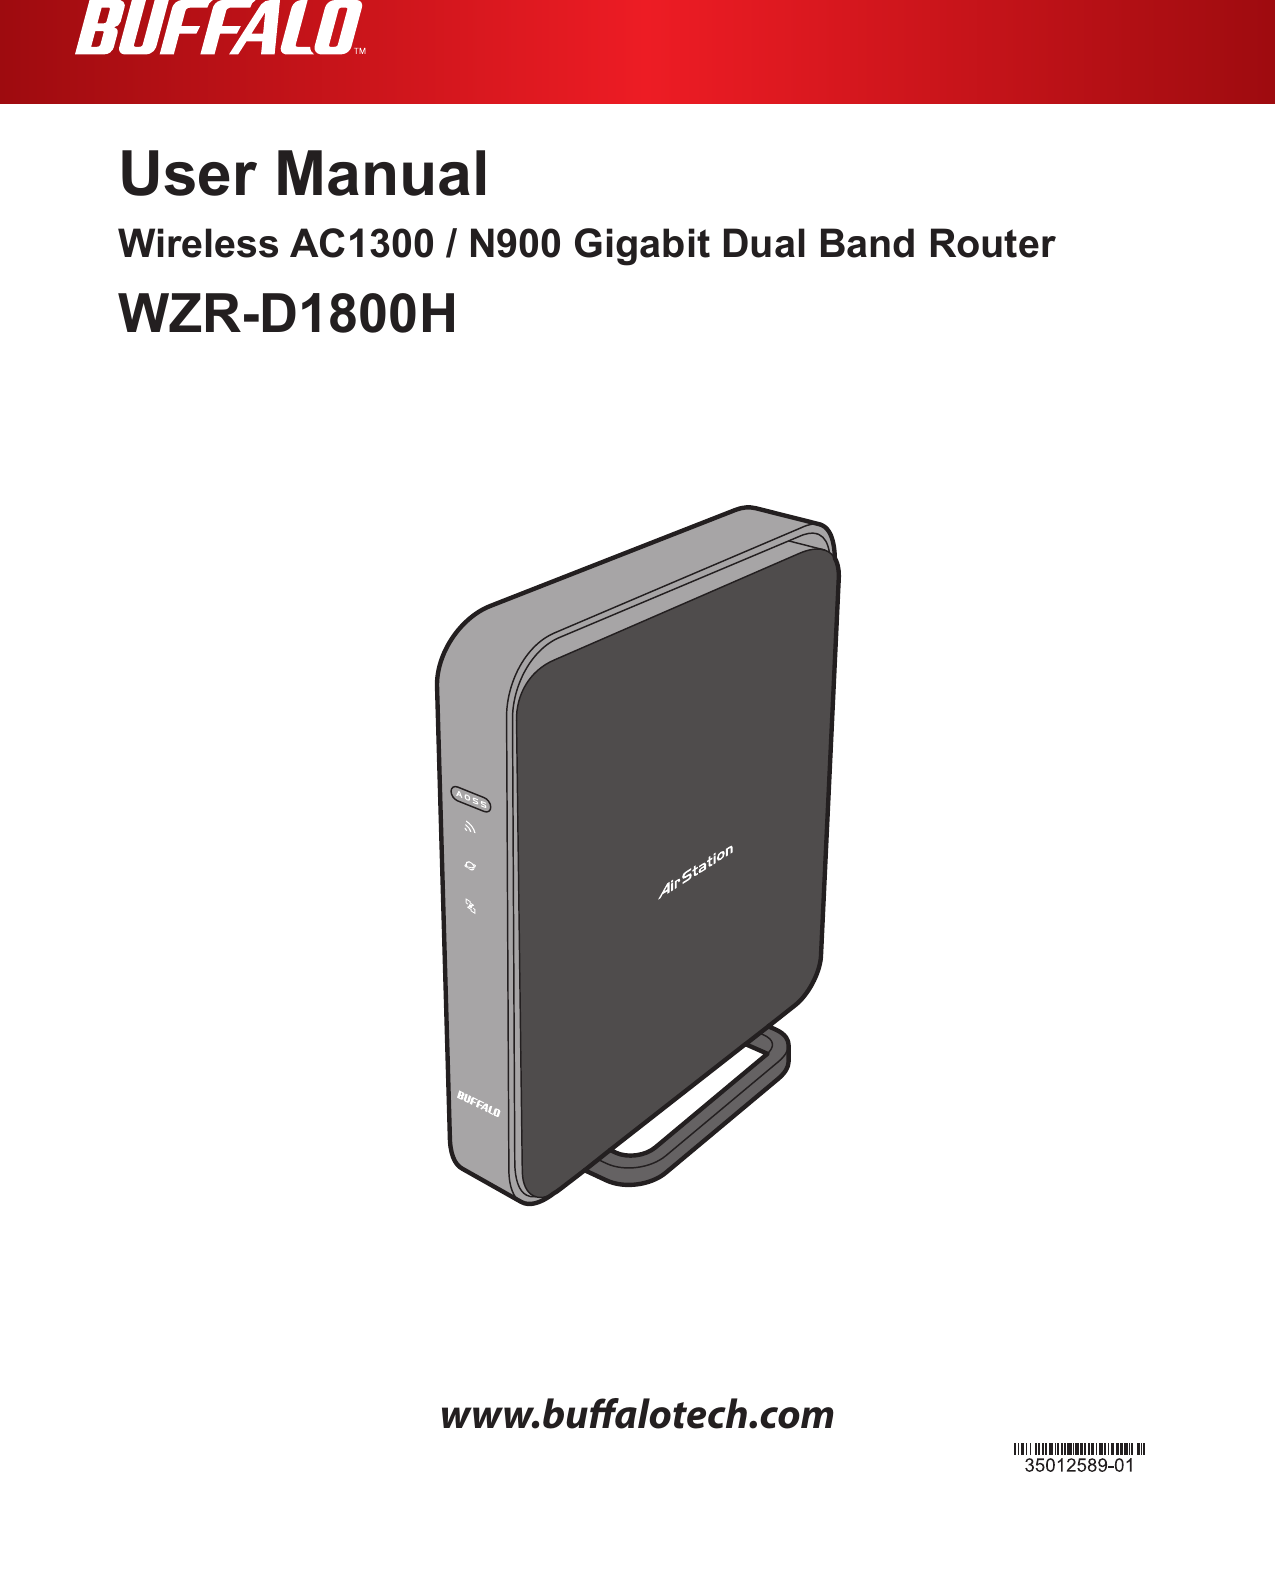 www.bualotech.comUser ManualWireless AC1300 / N900 Gigabit Dual Band RouterWZR-D1800H